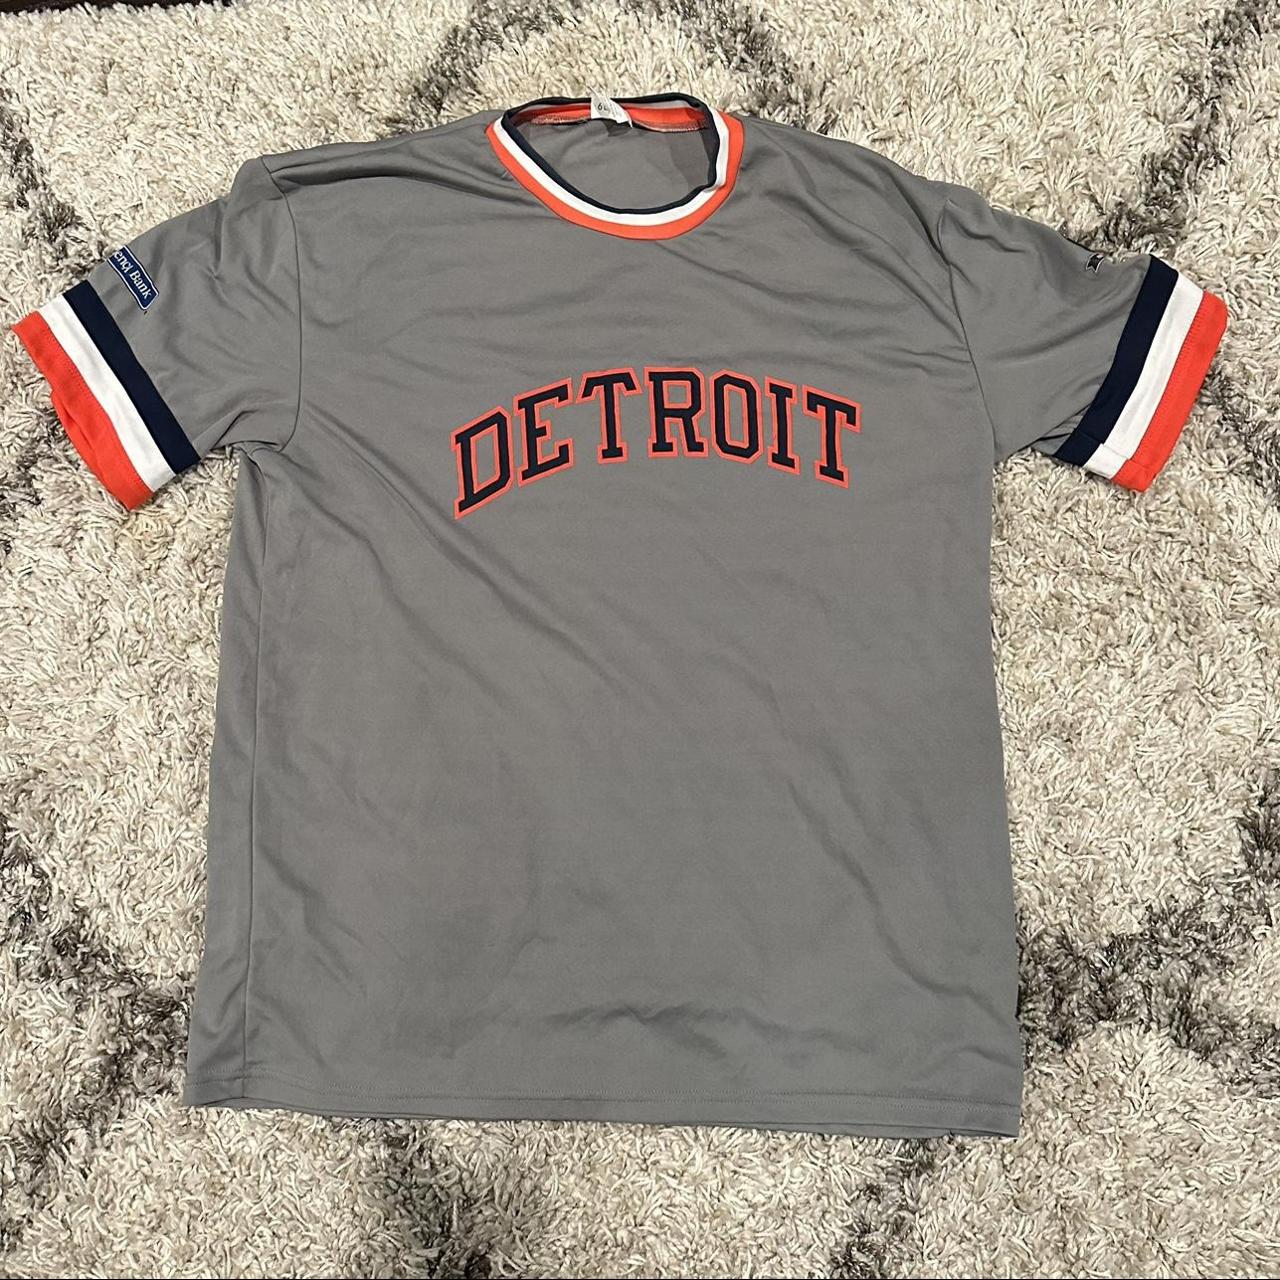 Vintage 1984 champions Detroit tigers jersey Retro - Depop